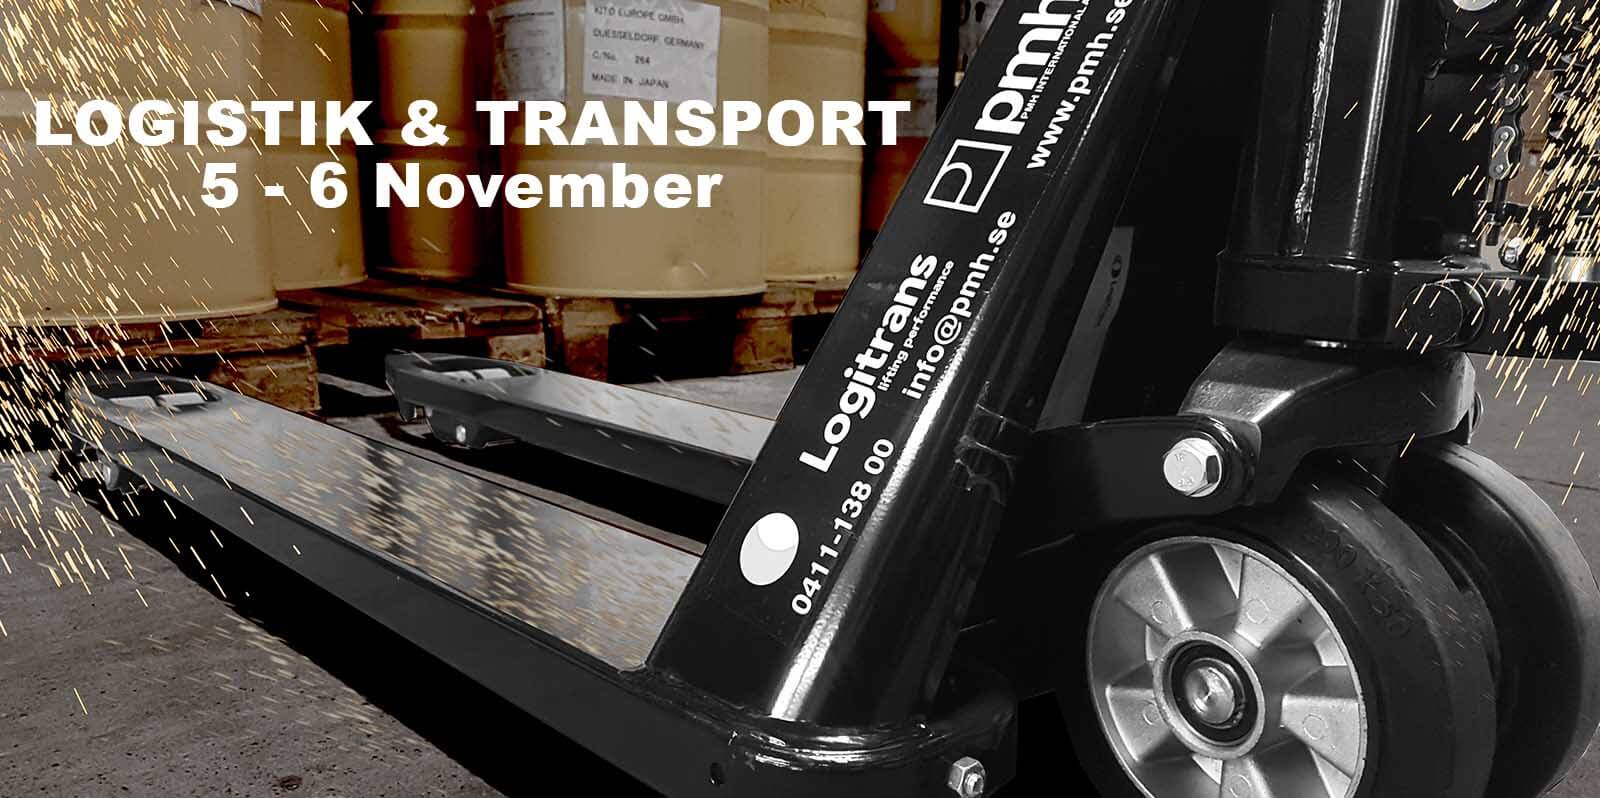 Logistik & Transport i Göteborg 5-6 November 2019